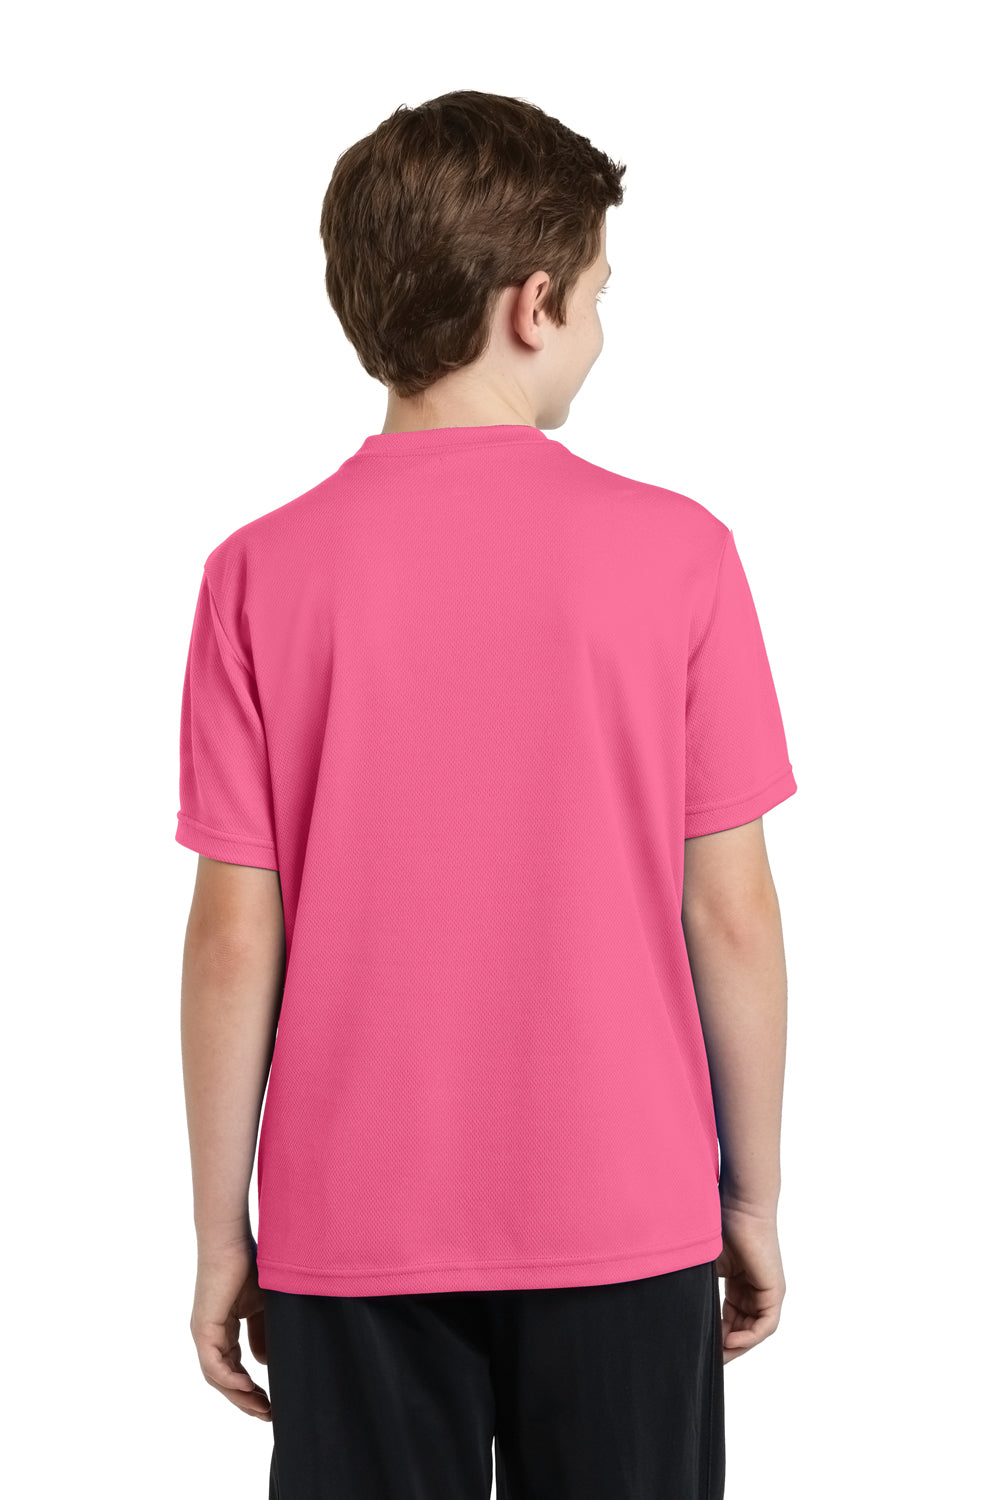 Sport-Tek YST340 Youth RacerMesh Moisture Wicking Short Sleeve Crewneck T-Shirt Pink Back